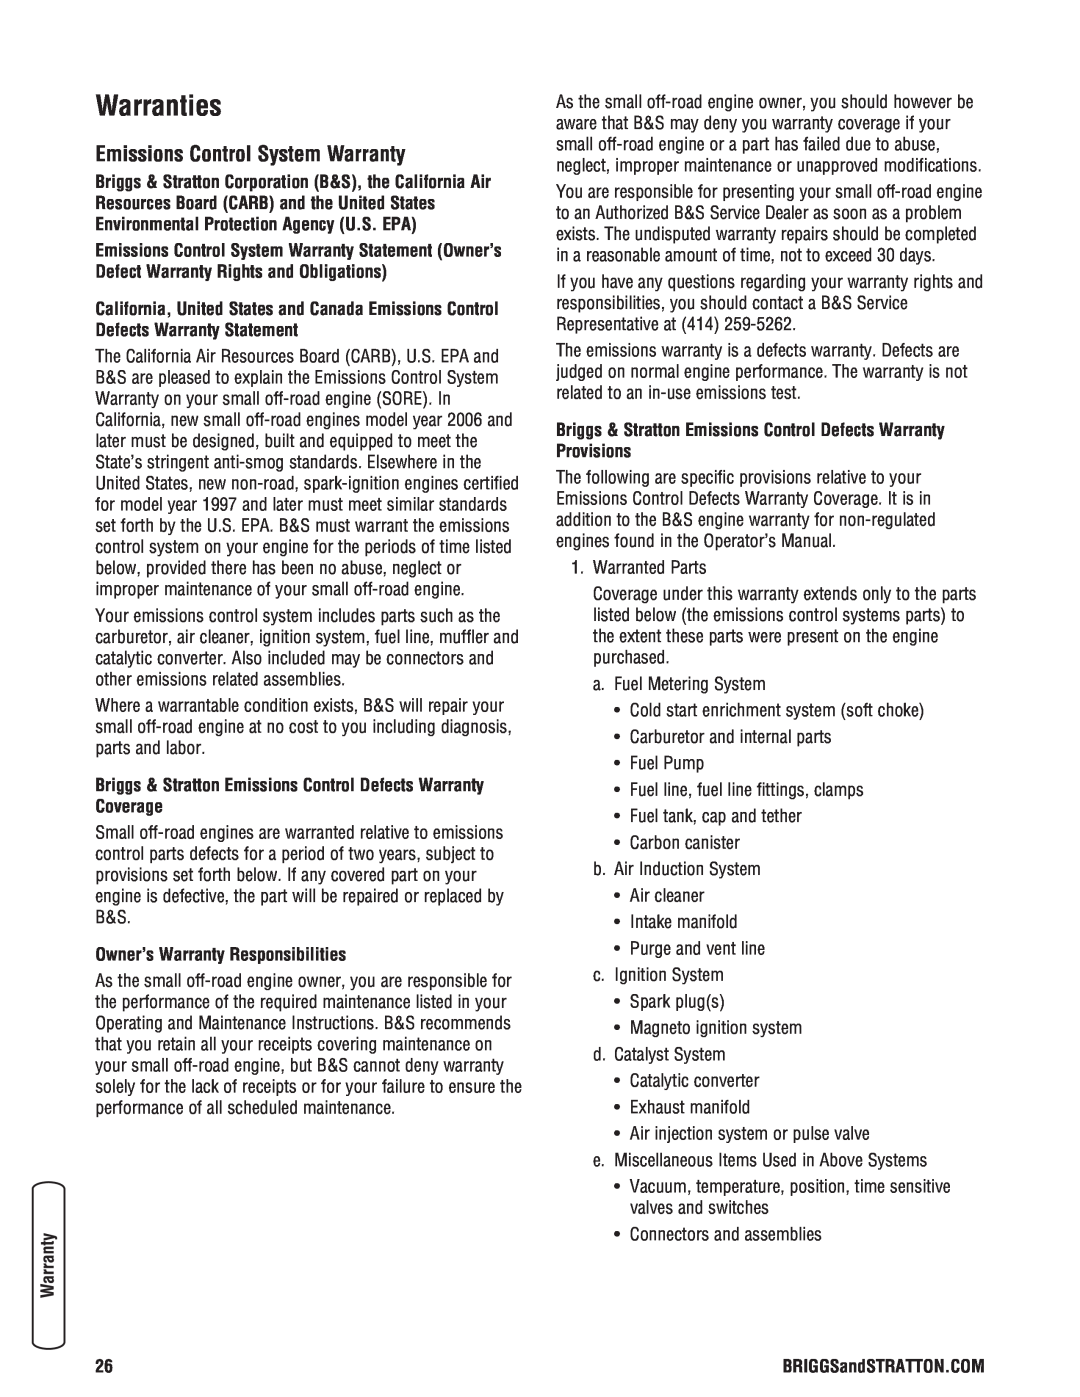 Briggs & Stratton 020364-0 manual Warranties, Emissions Control System Warranty, Owner’s Warranty Responsibilities 